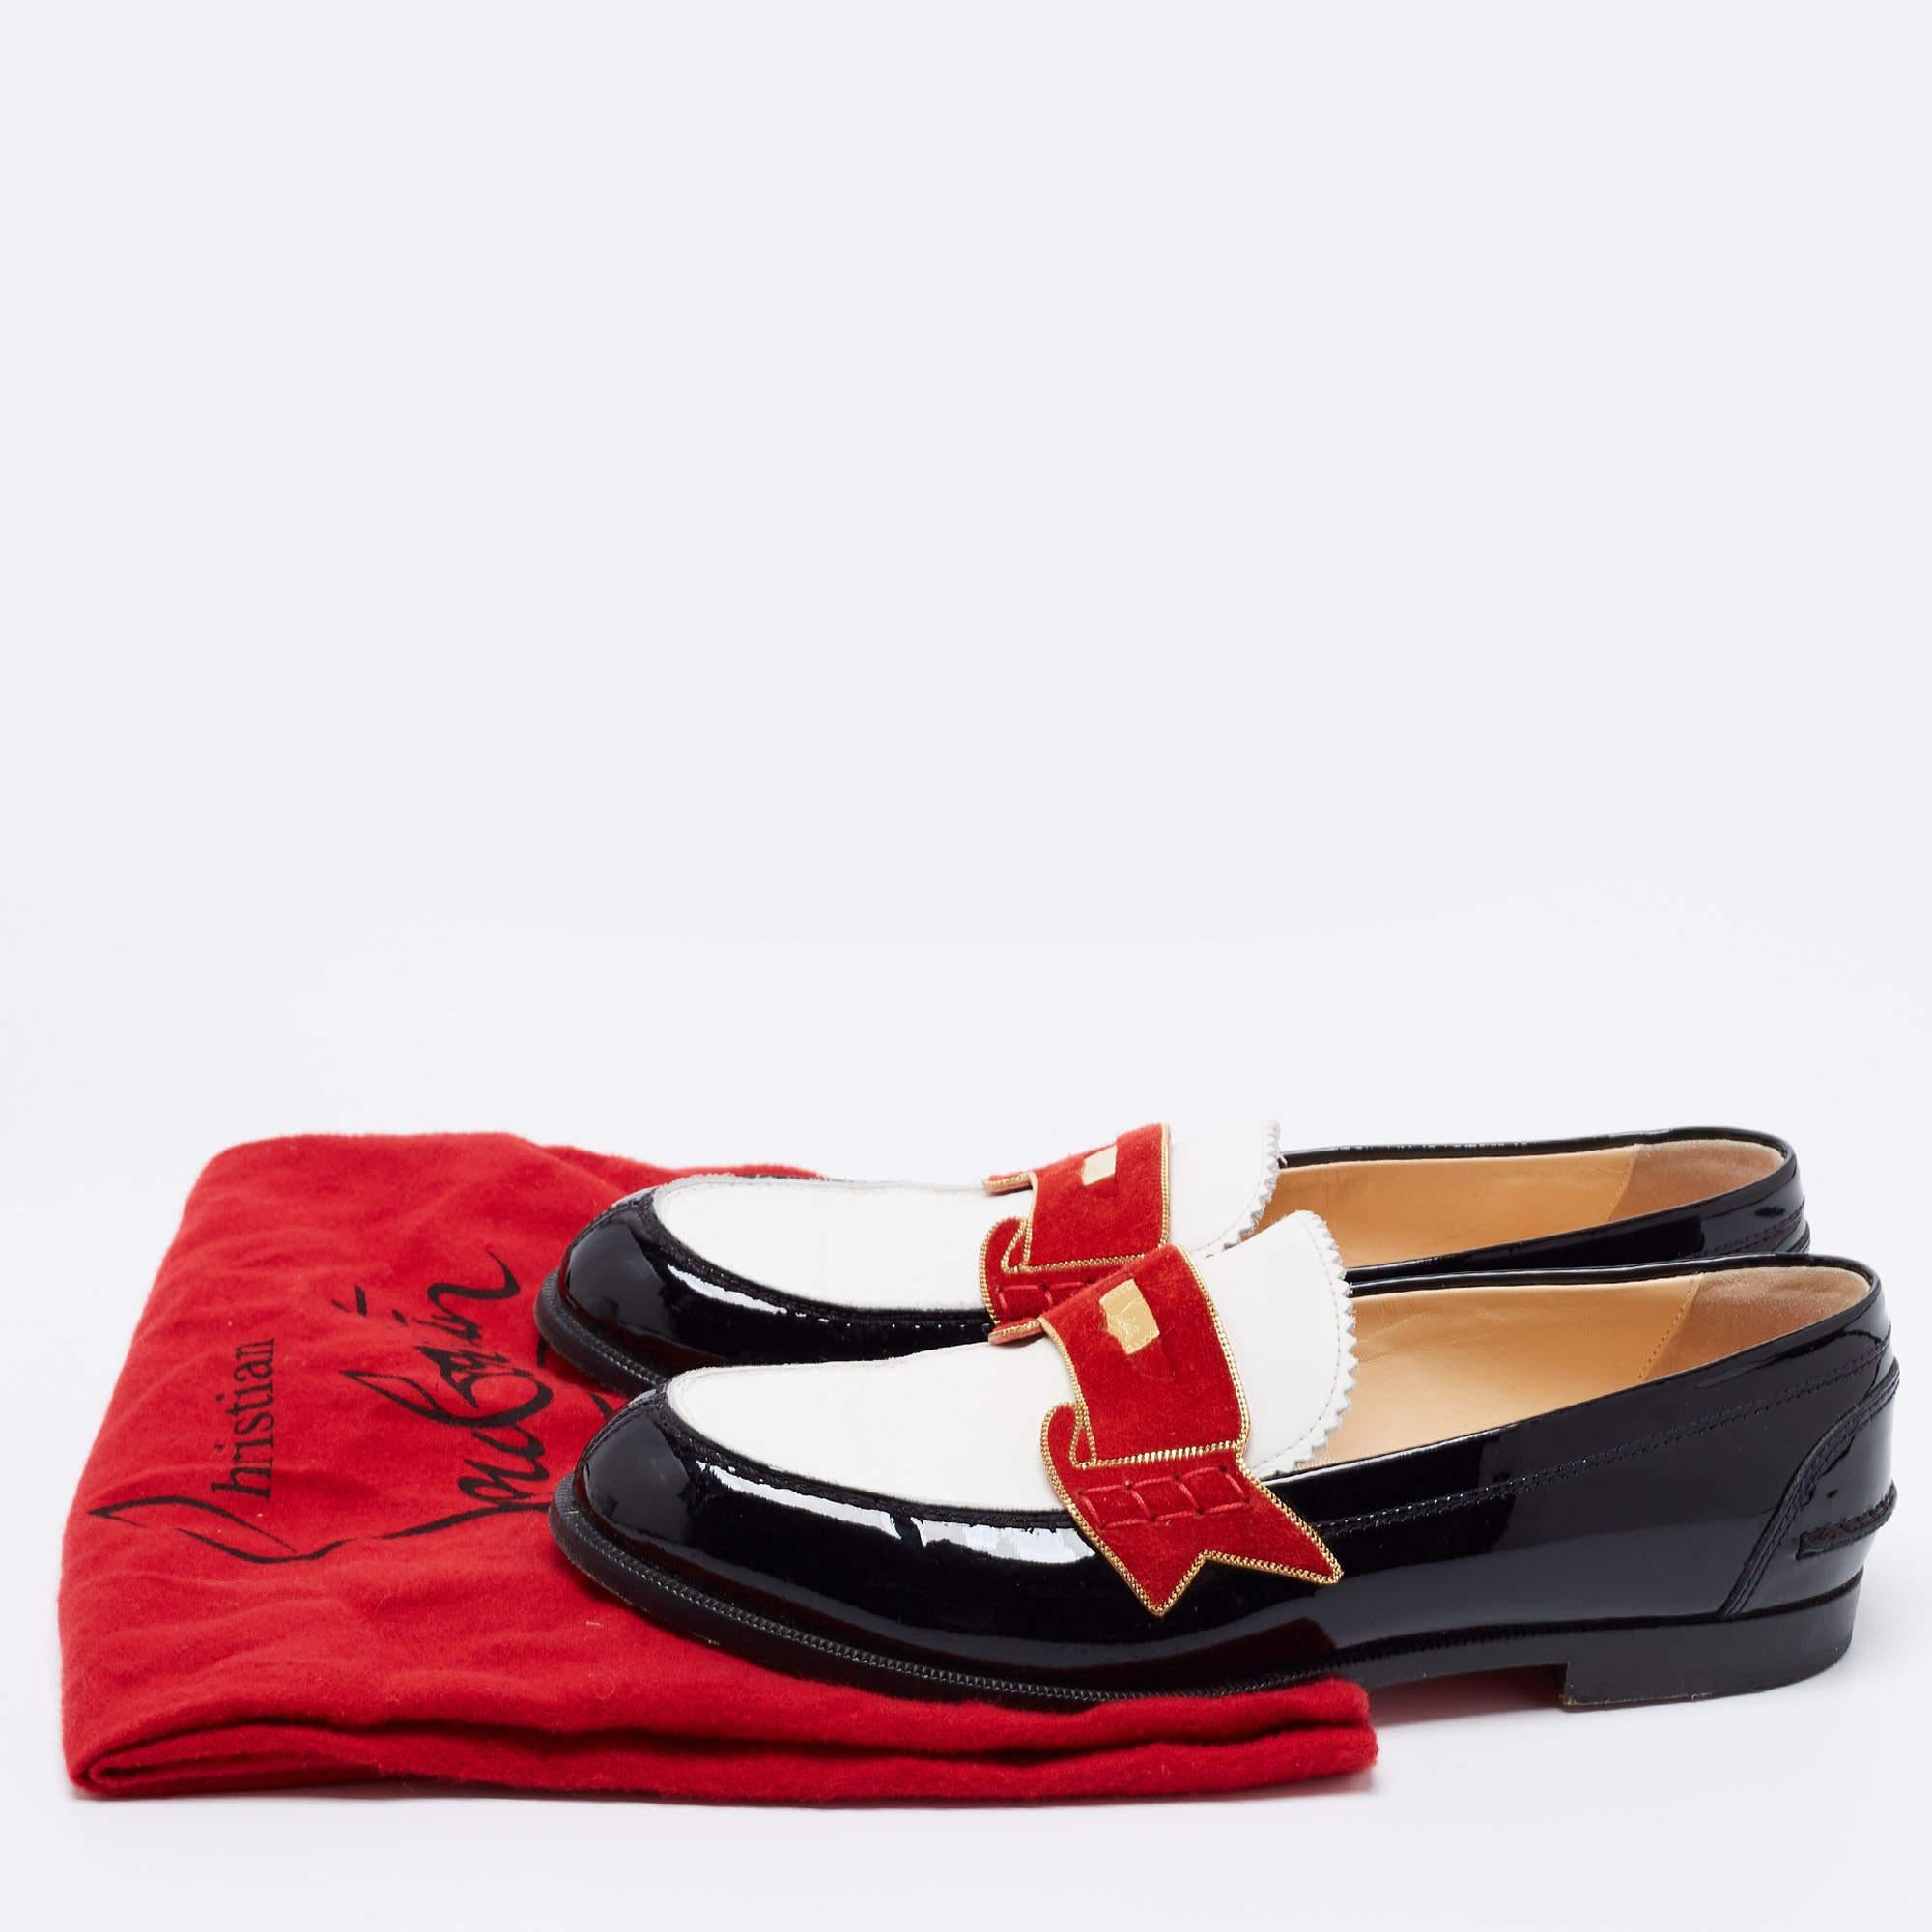 Christian Louboutin Multicolor Patent Leather Monono Flat Loafers Size 36.5 1